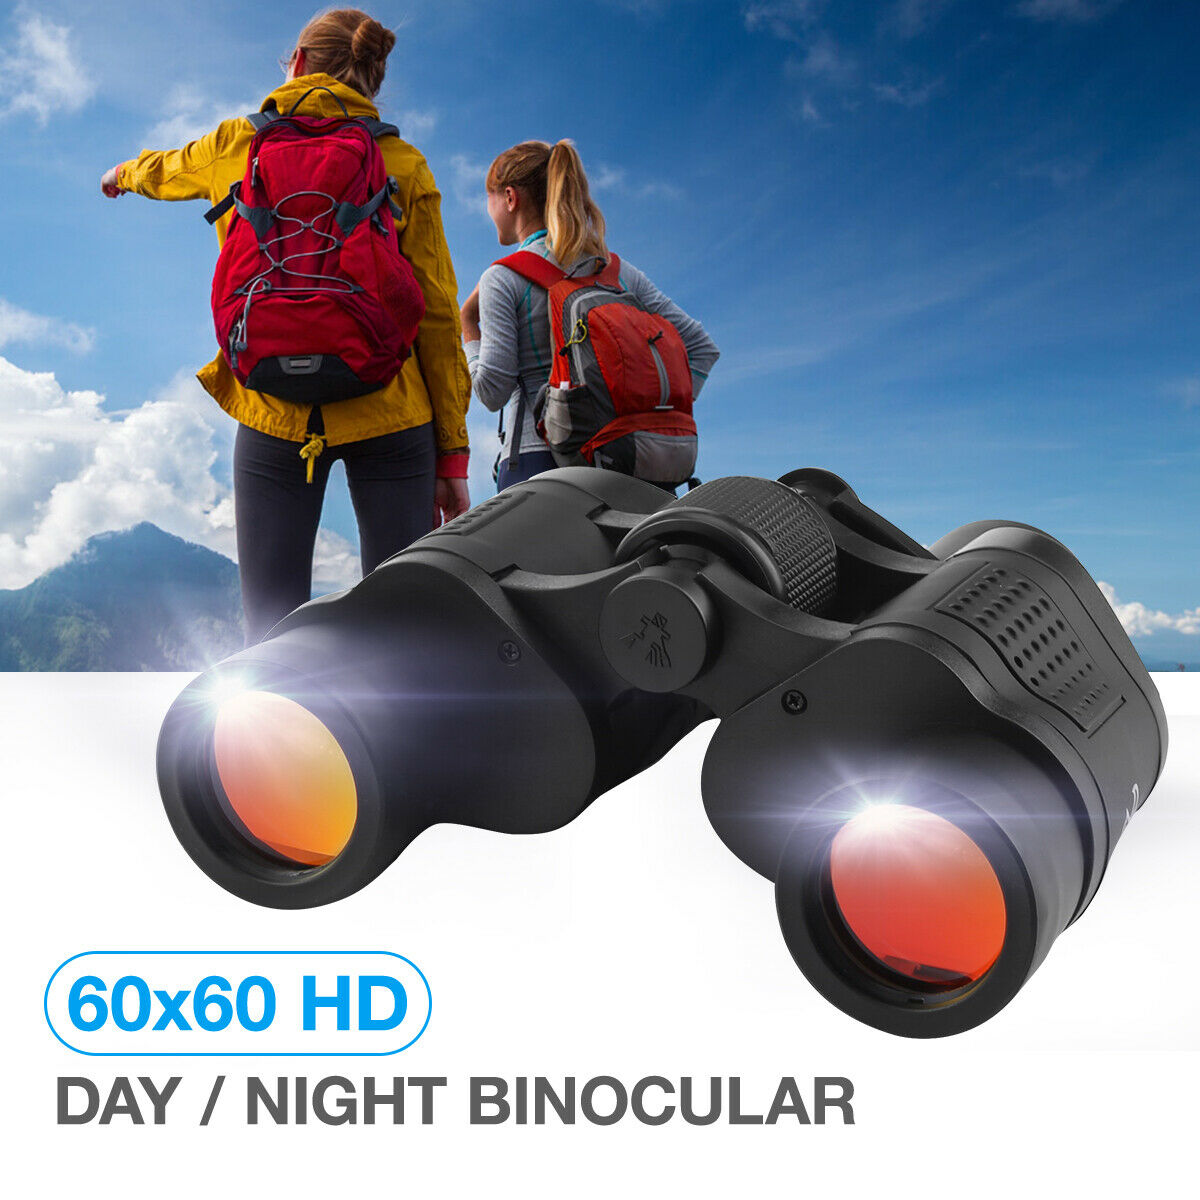 Optical Telescope Night Vision Binoculars: High Clarity Viewing Up to 3000M